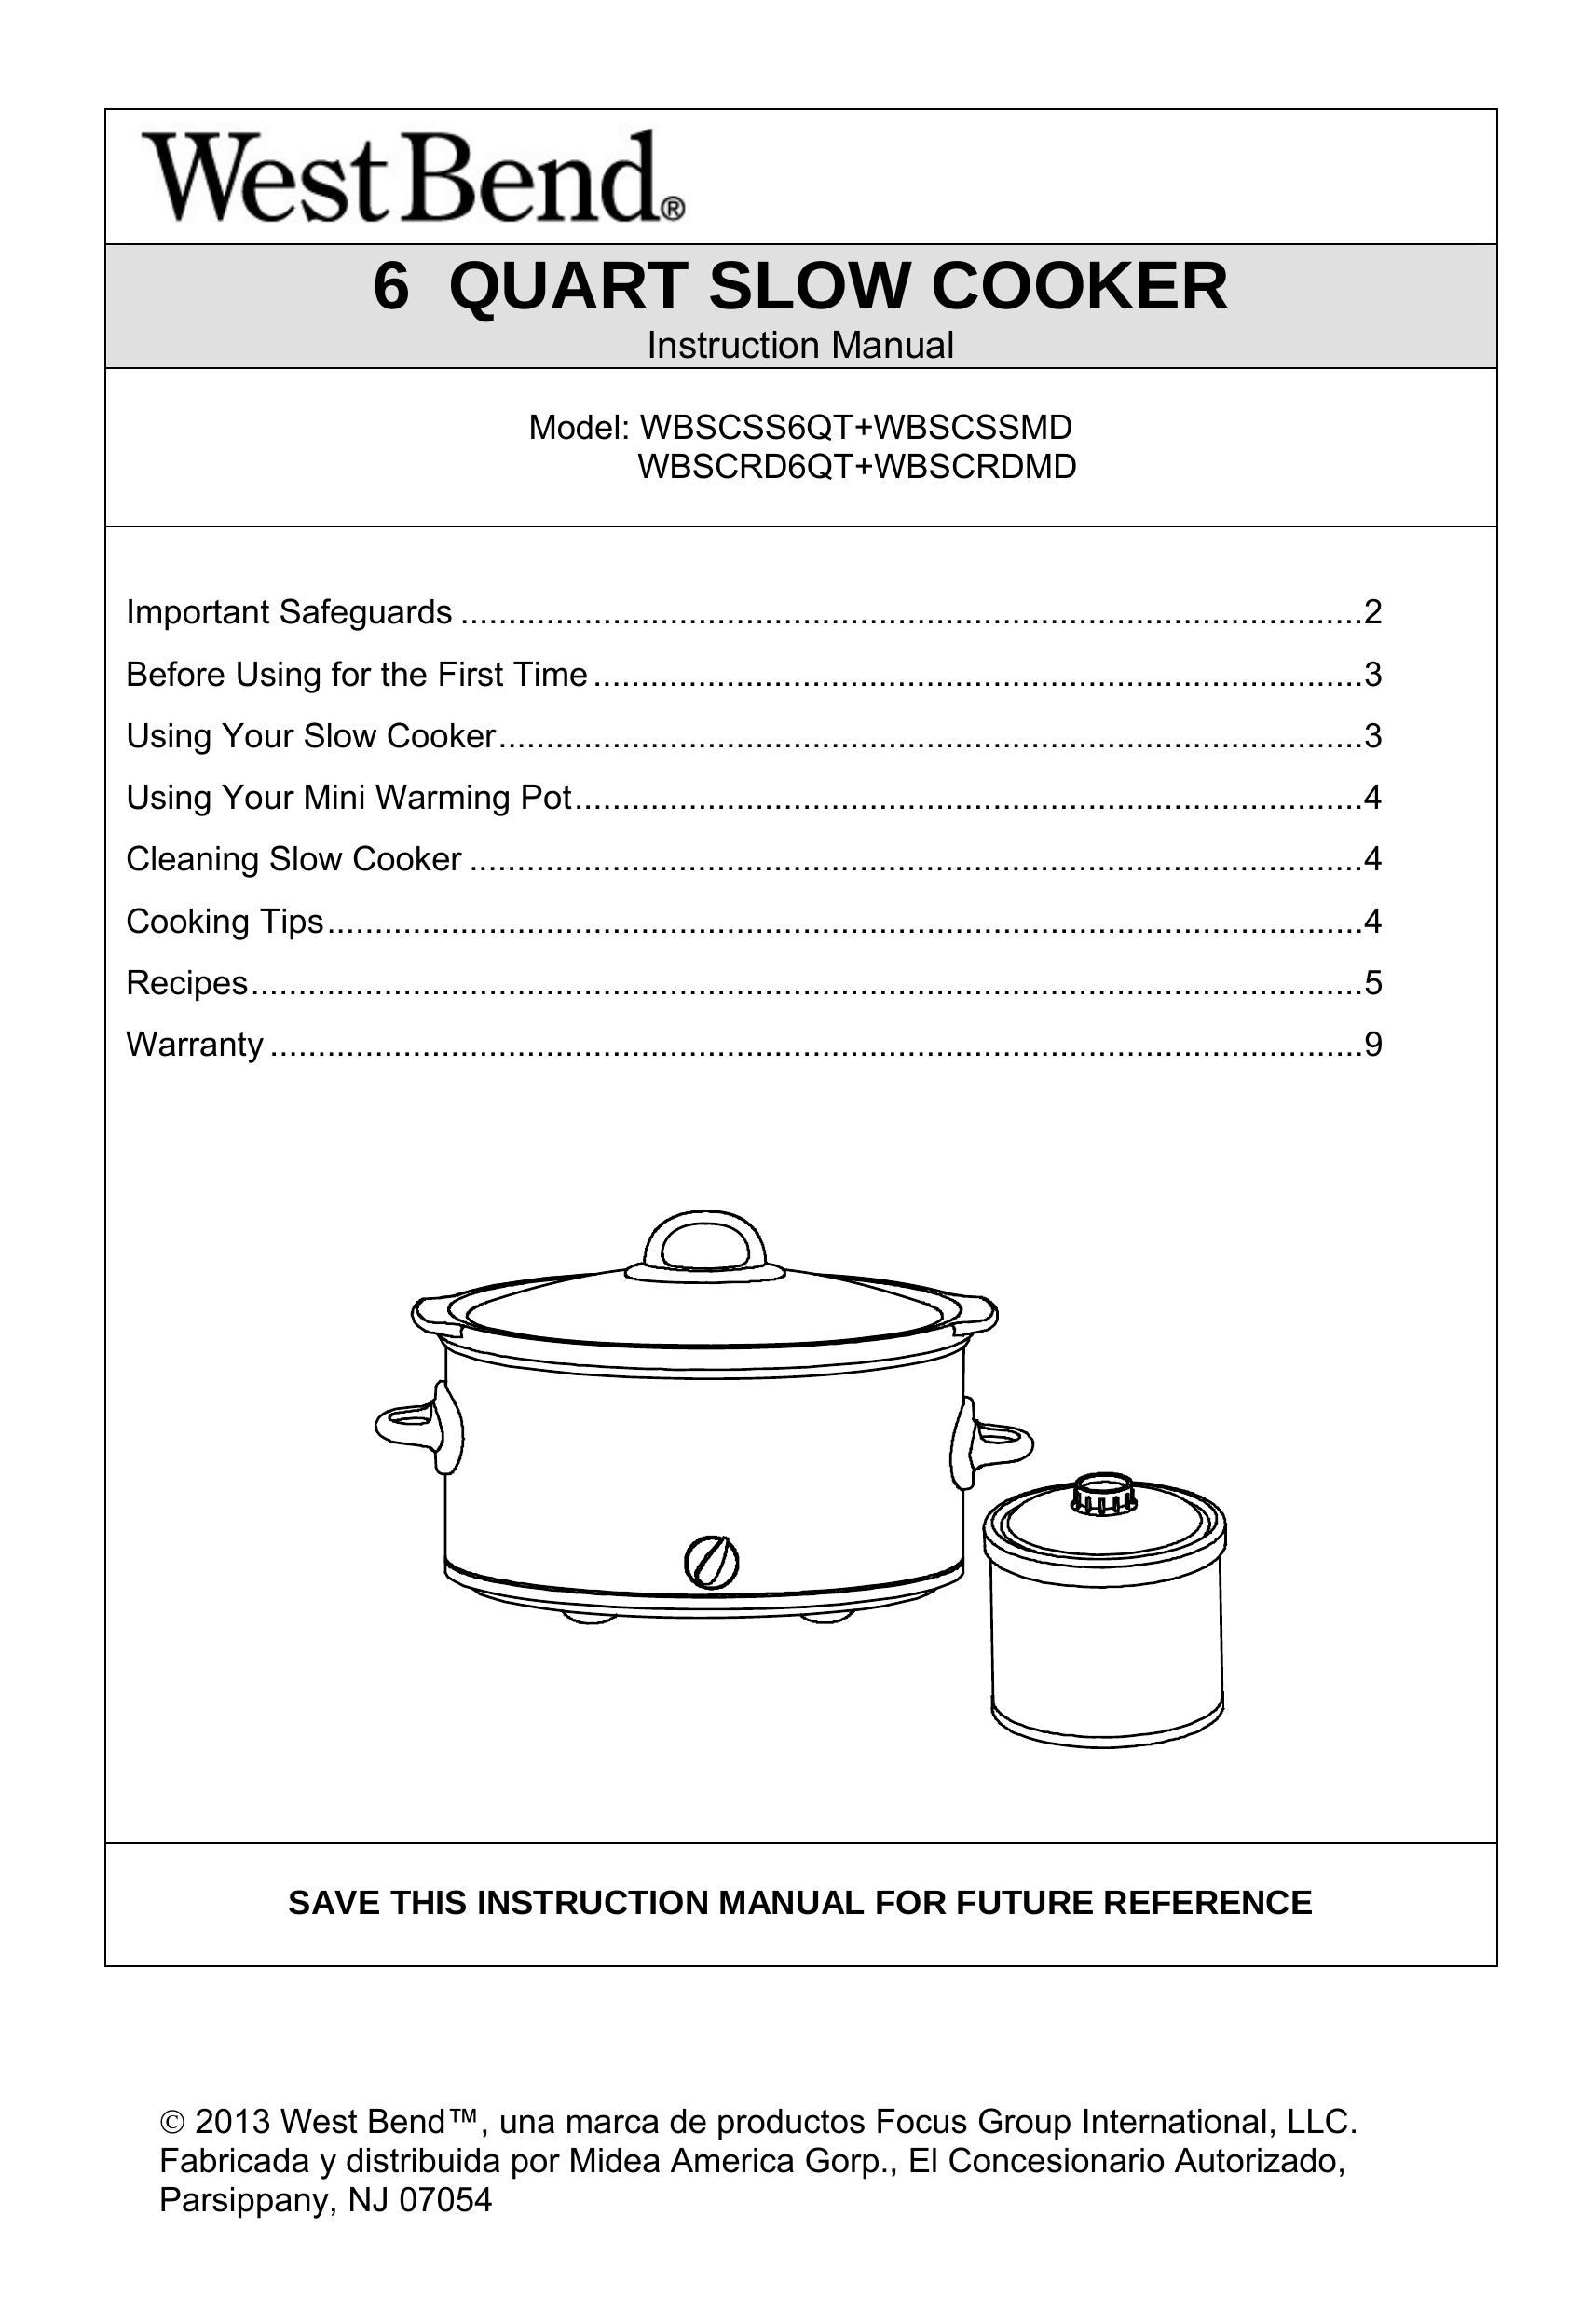 West Bend WBSCRD6QT Slow Cooker User Manual